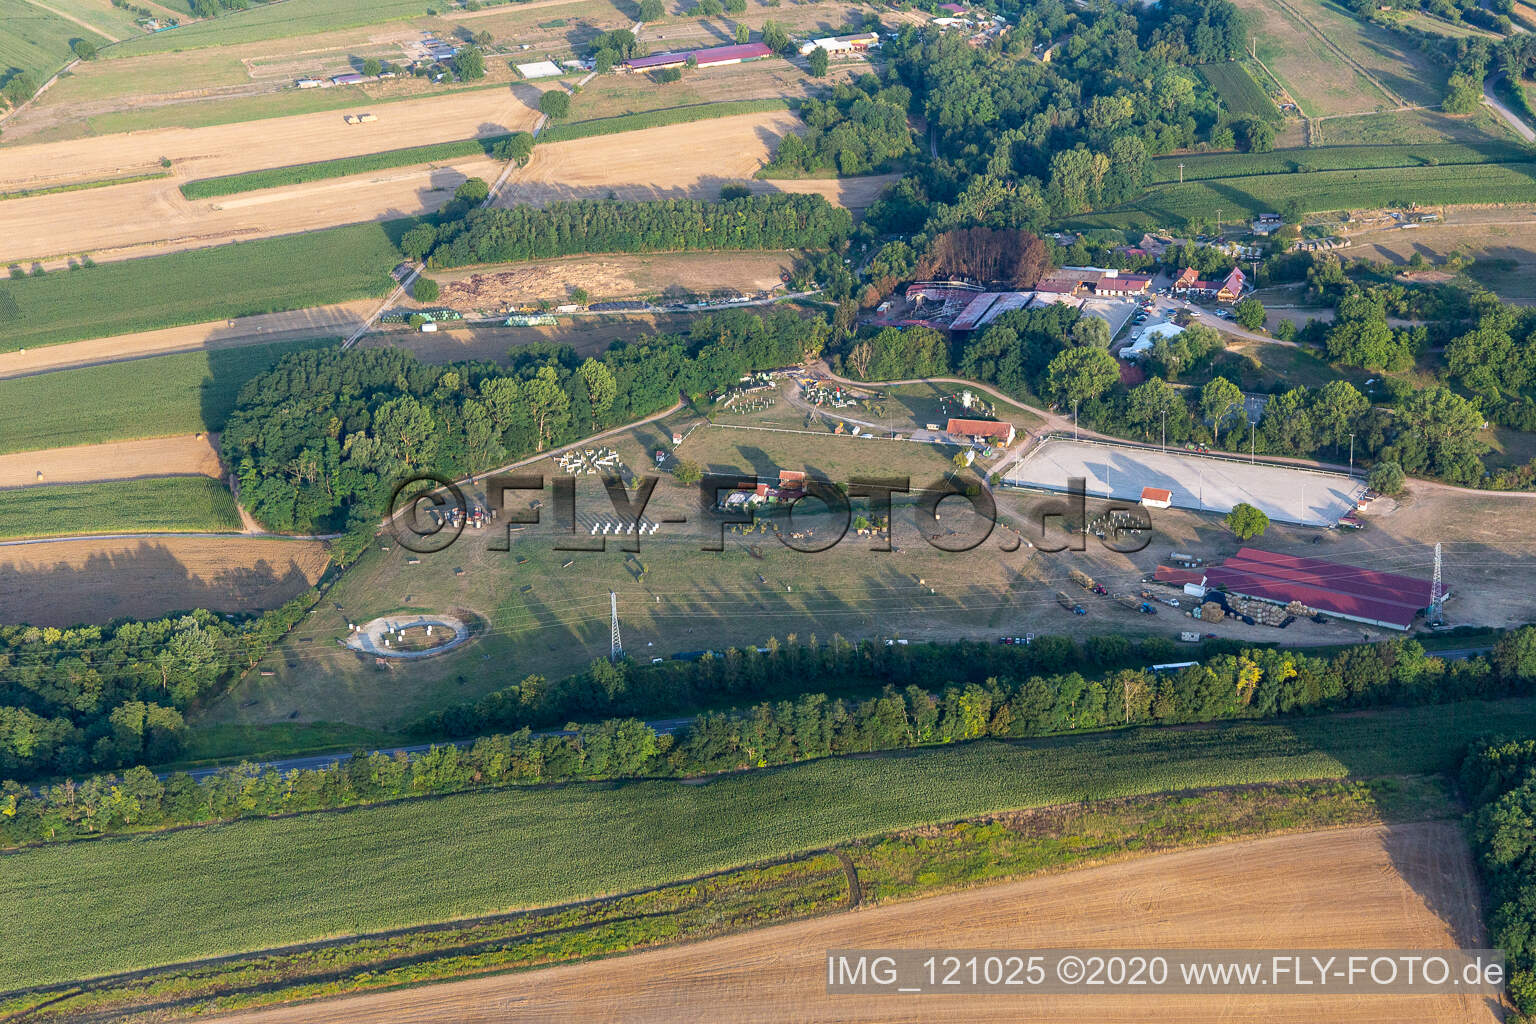 Luftbild von Haras de la Née in Neewiller-près-Lauterbourg im Bundesland Bas-Rhin, Frankreich